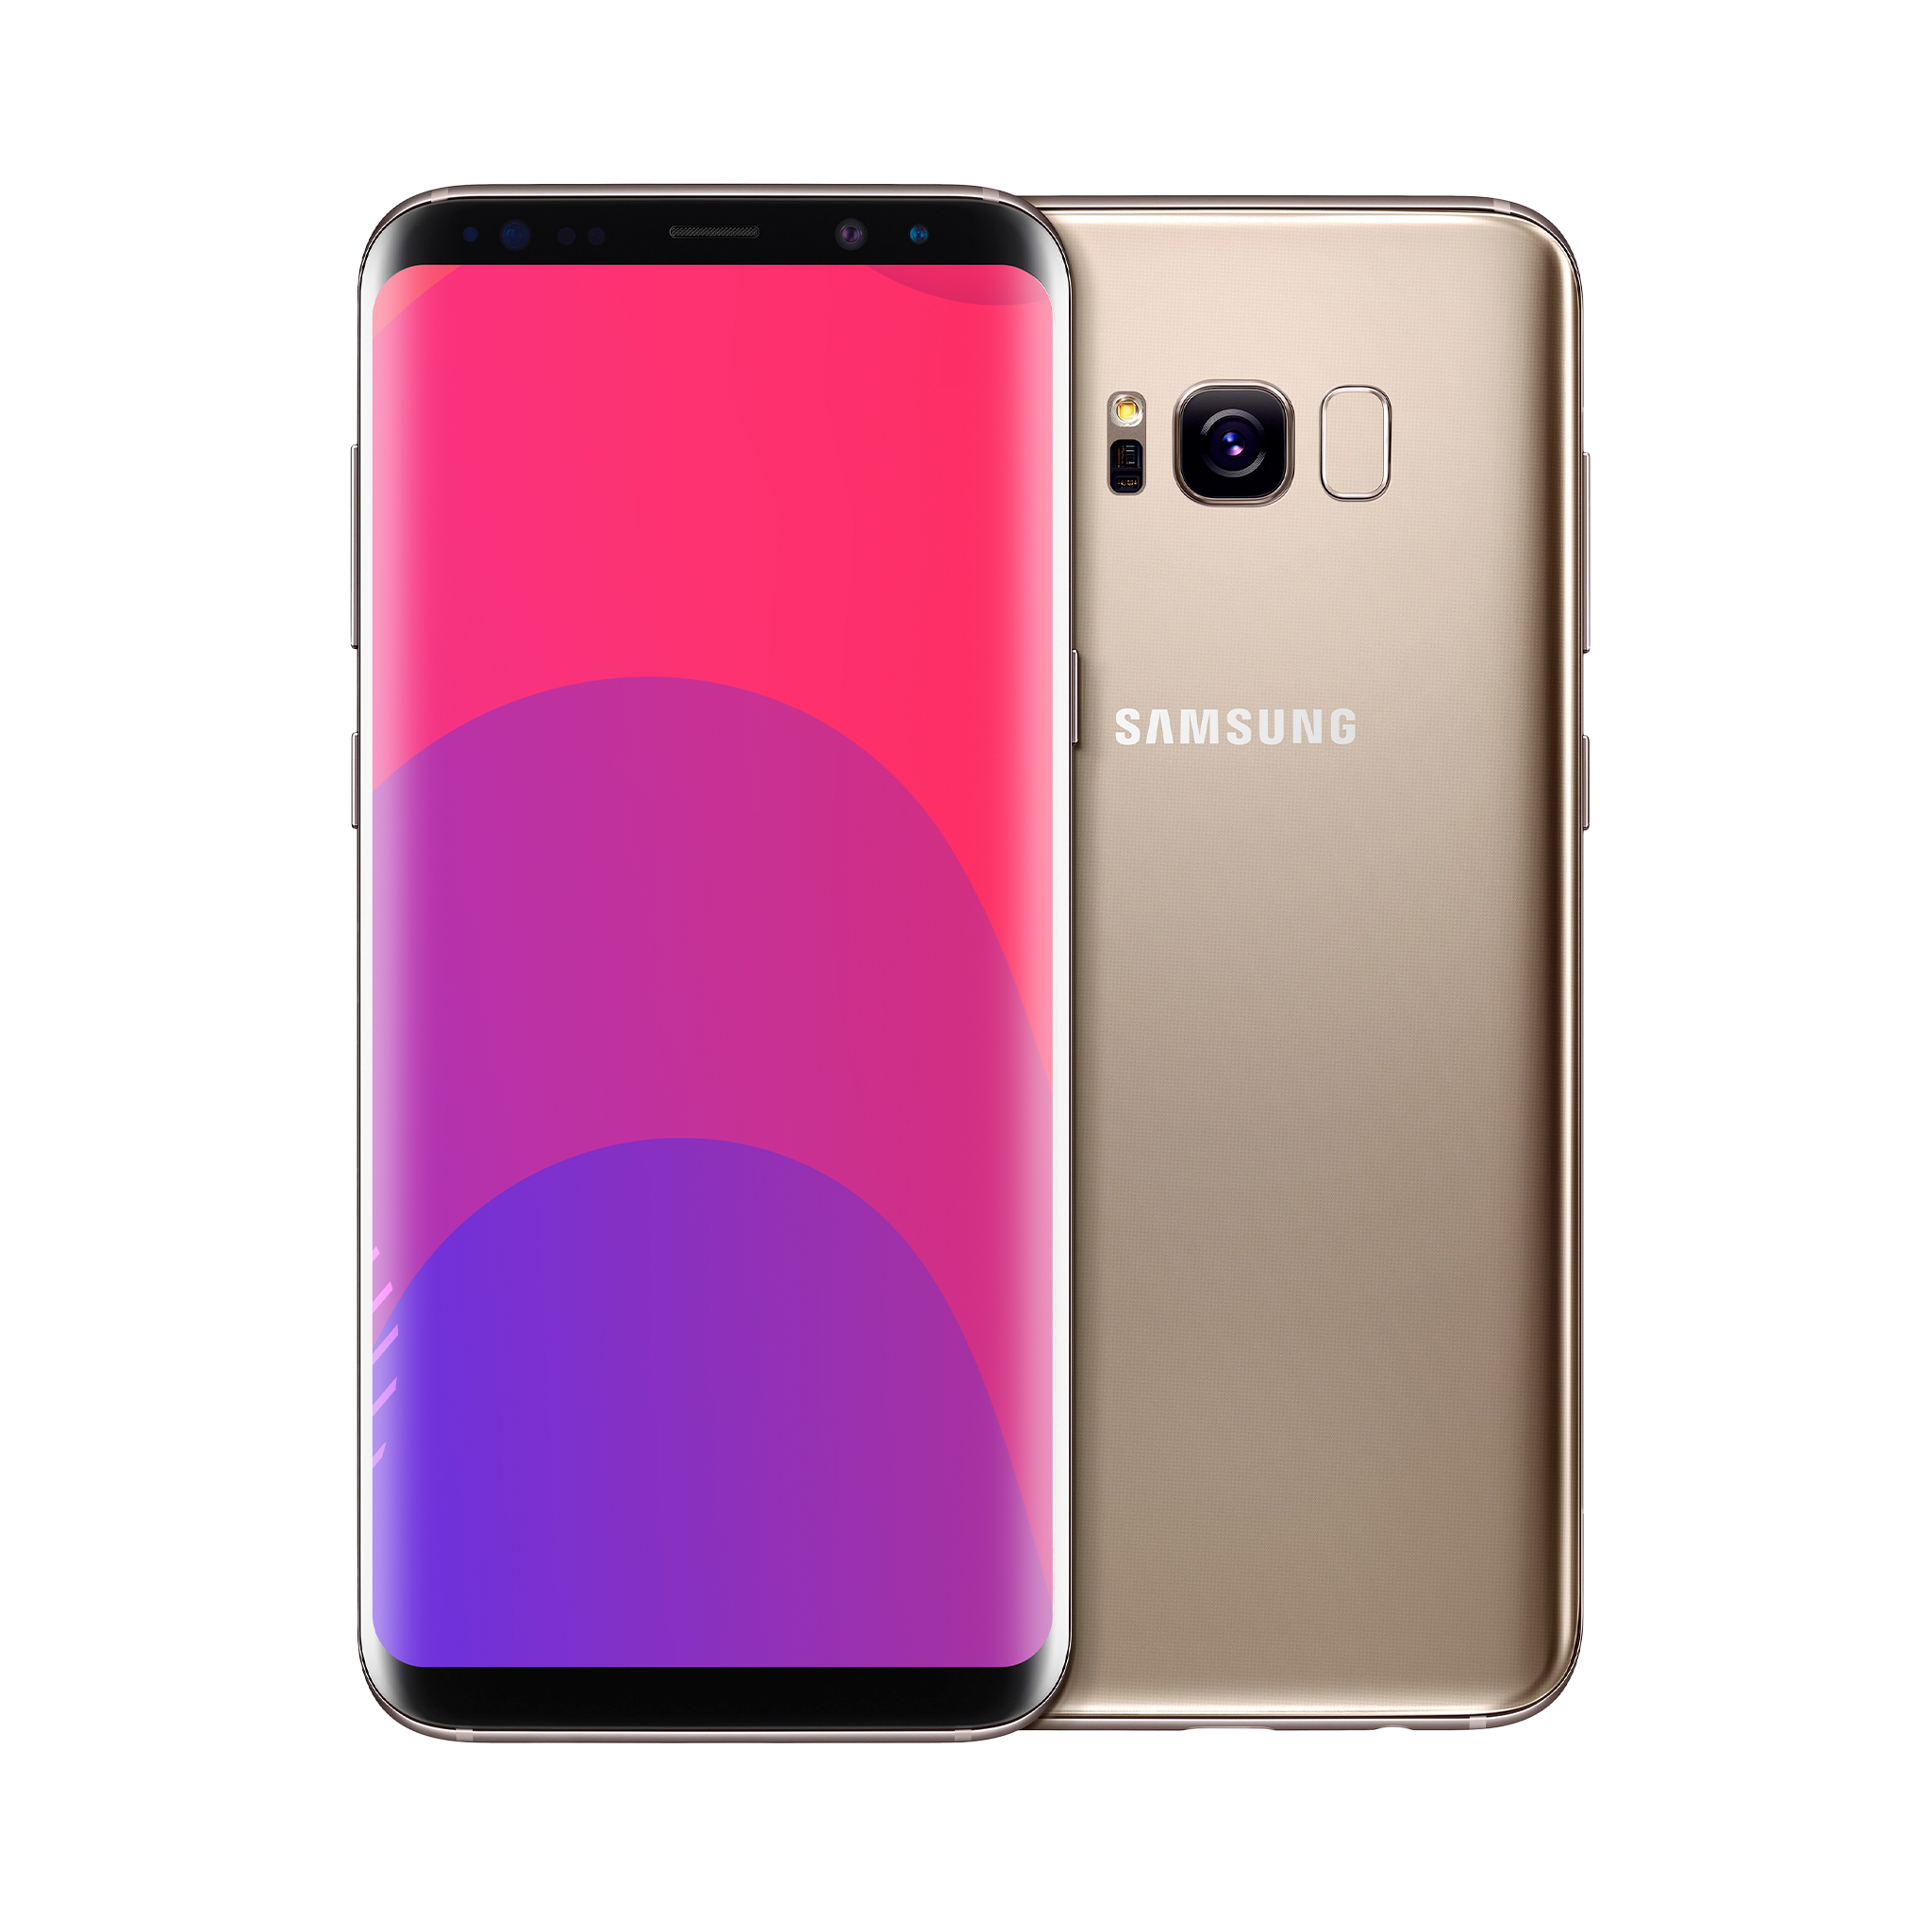 Samsung Galaxy S8 Plus 64GB Gold